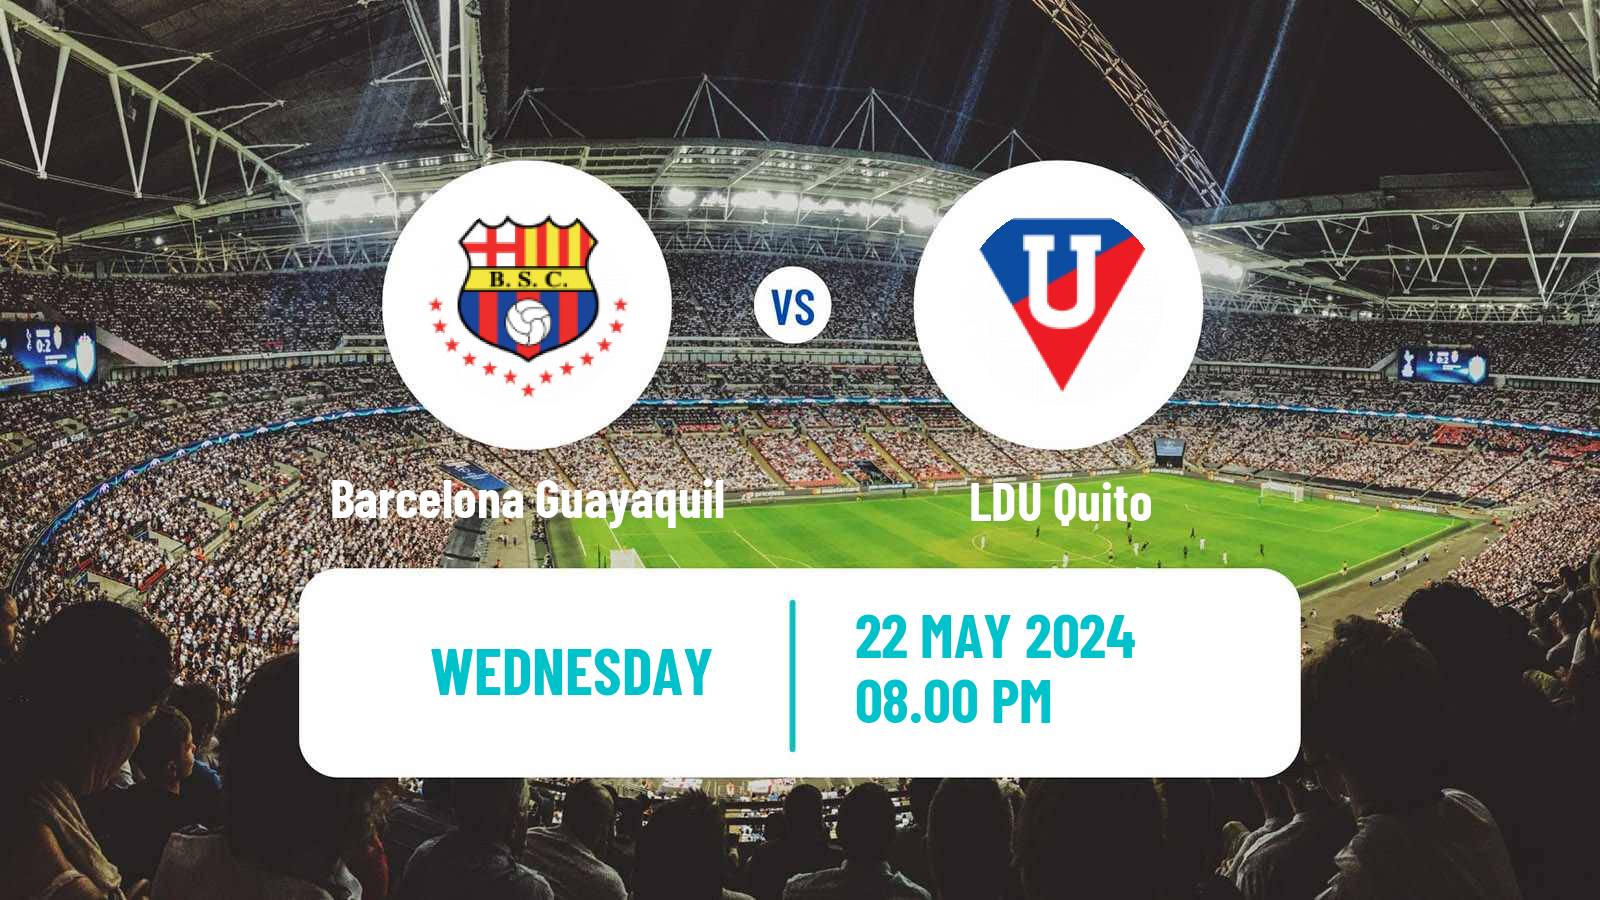 Soccer Ecuadorian Liga Pro Barcelona Guayaquil - LDU Quito